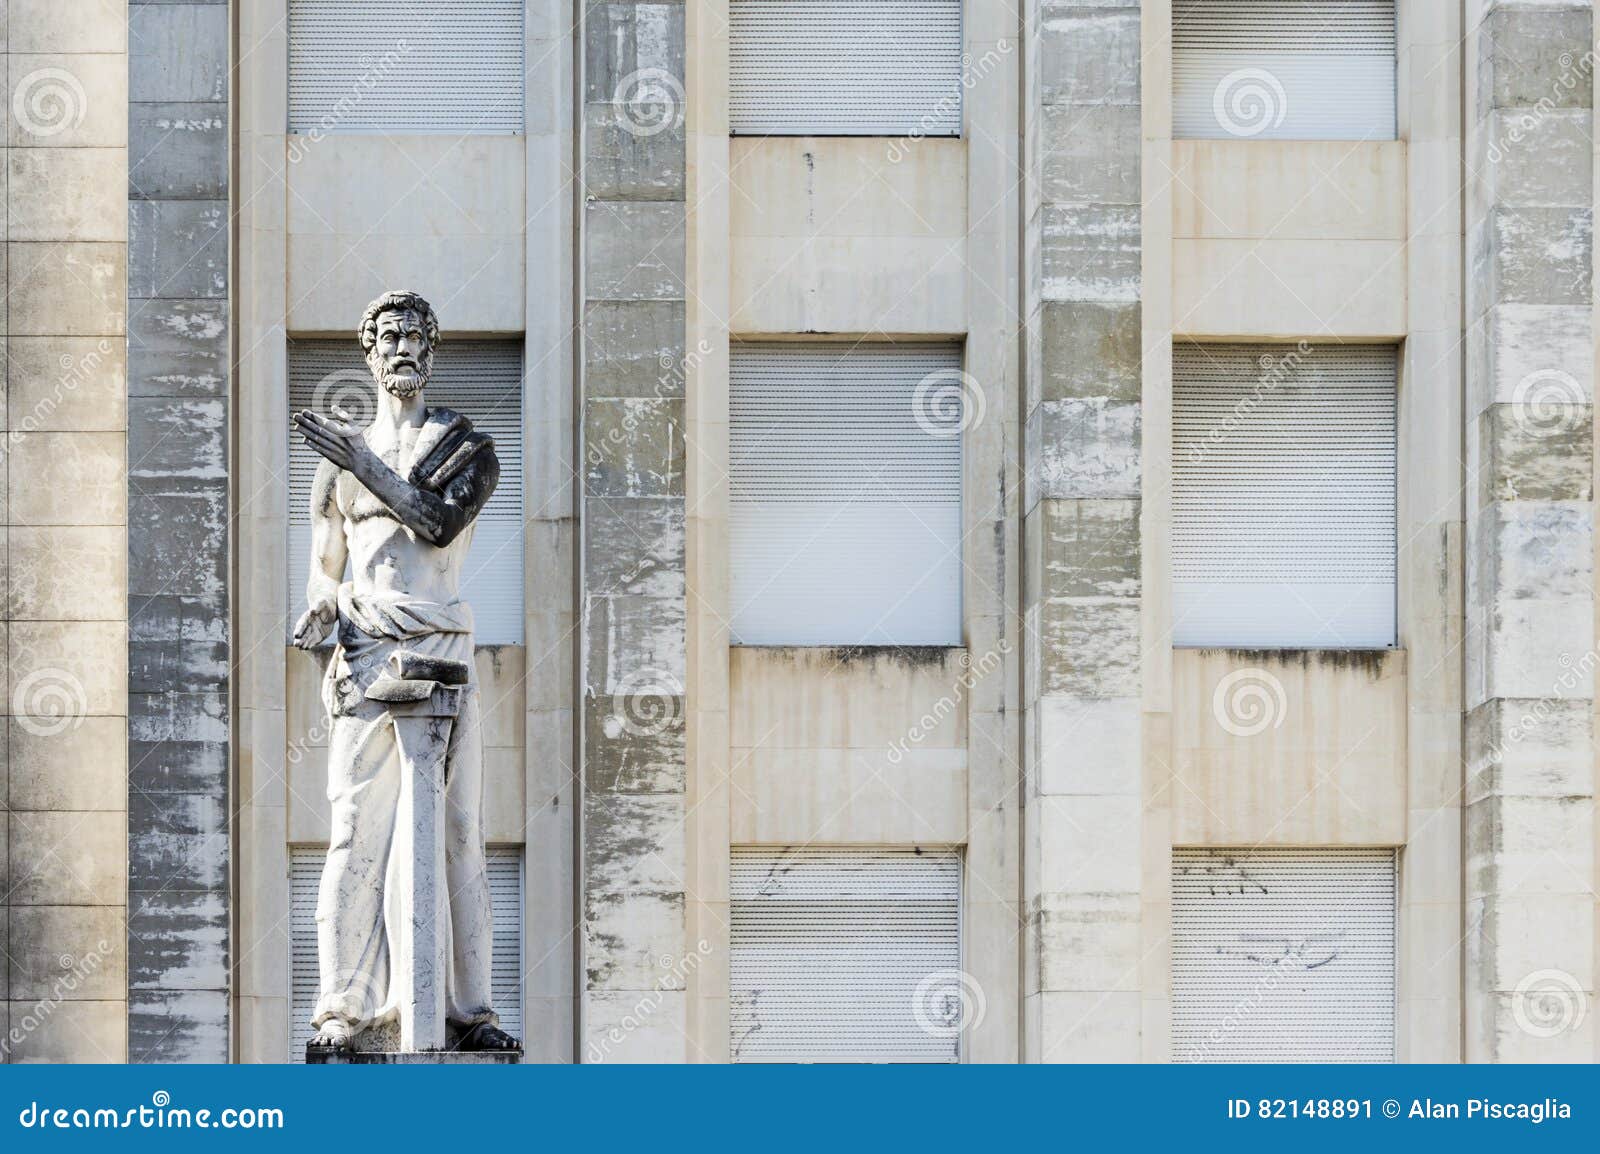 statue in coimbra university